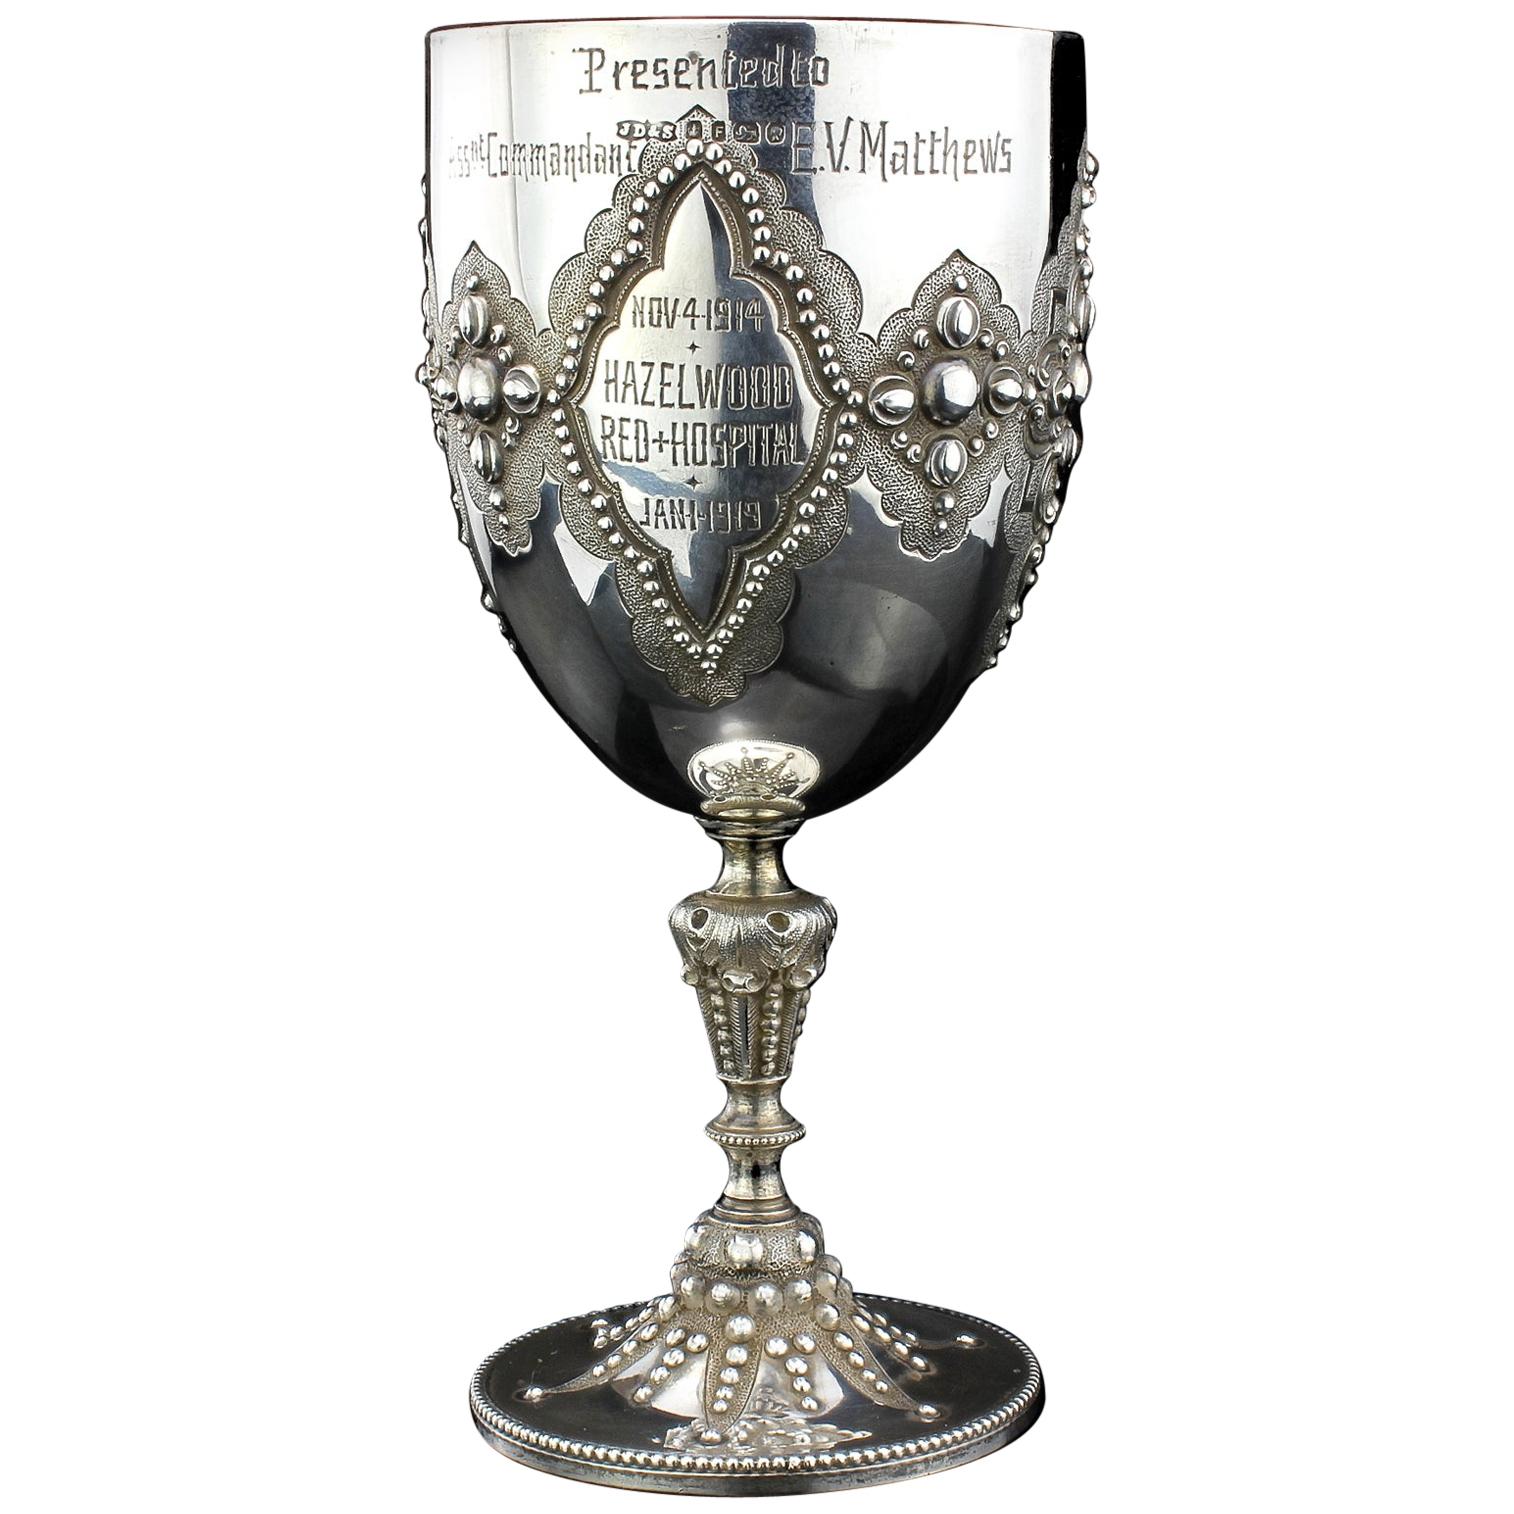 Antique Victorian Sterling Silver Commemoration Goblet, James Dixon & Sons, 1873